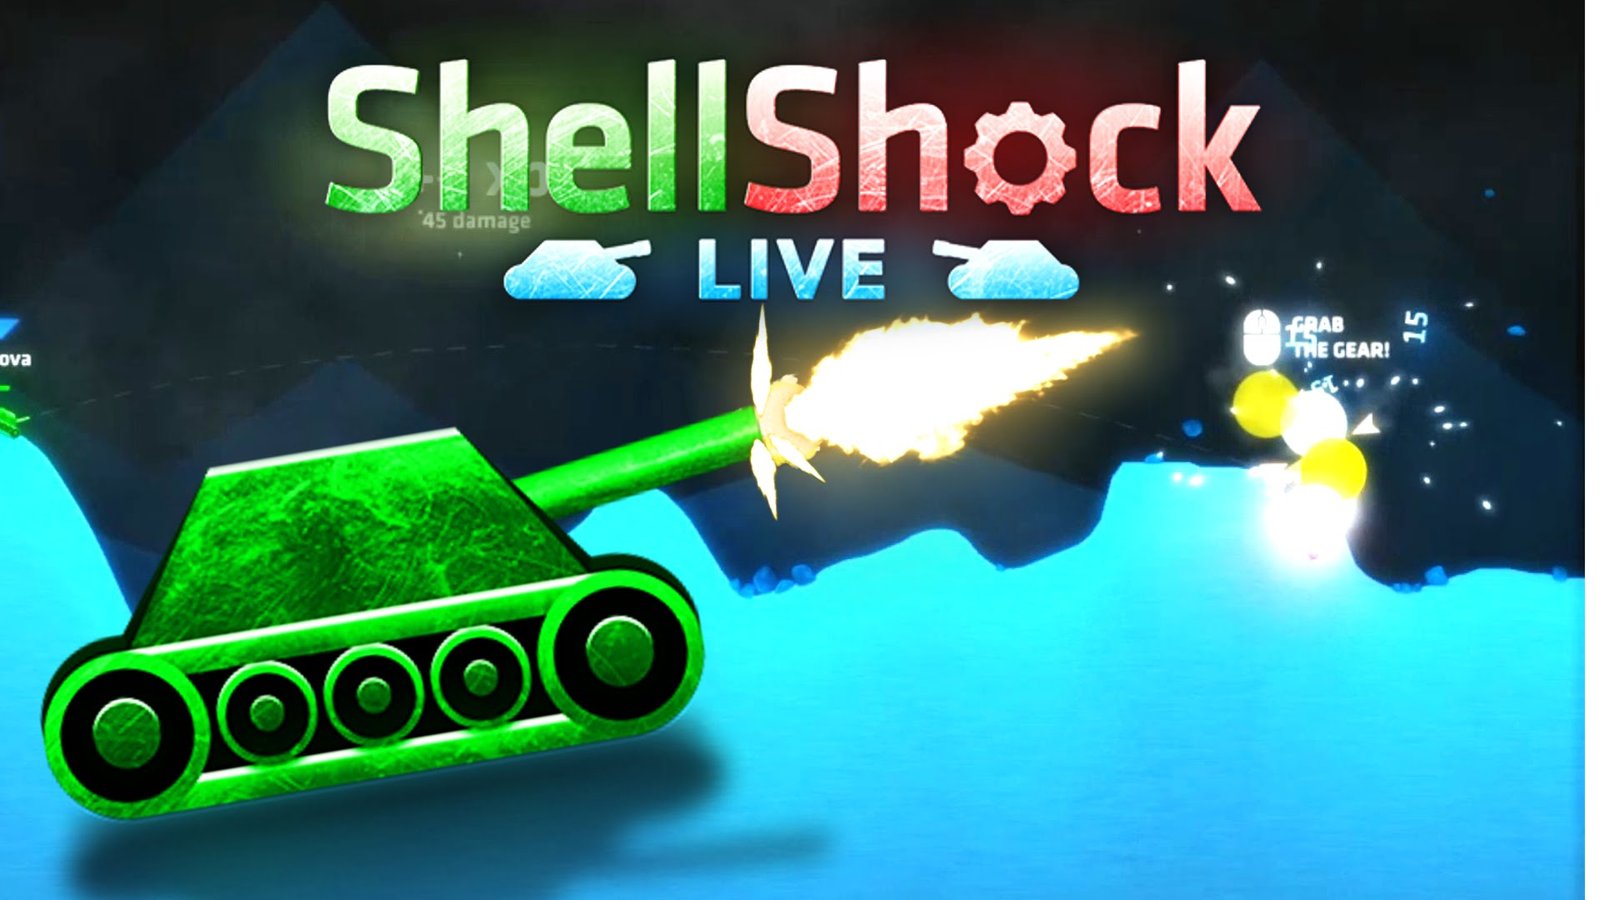 kongregate shellshock live 2